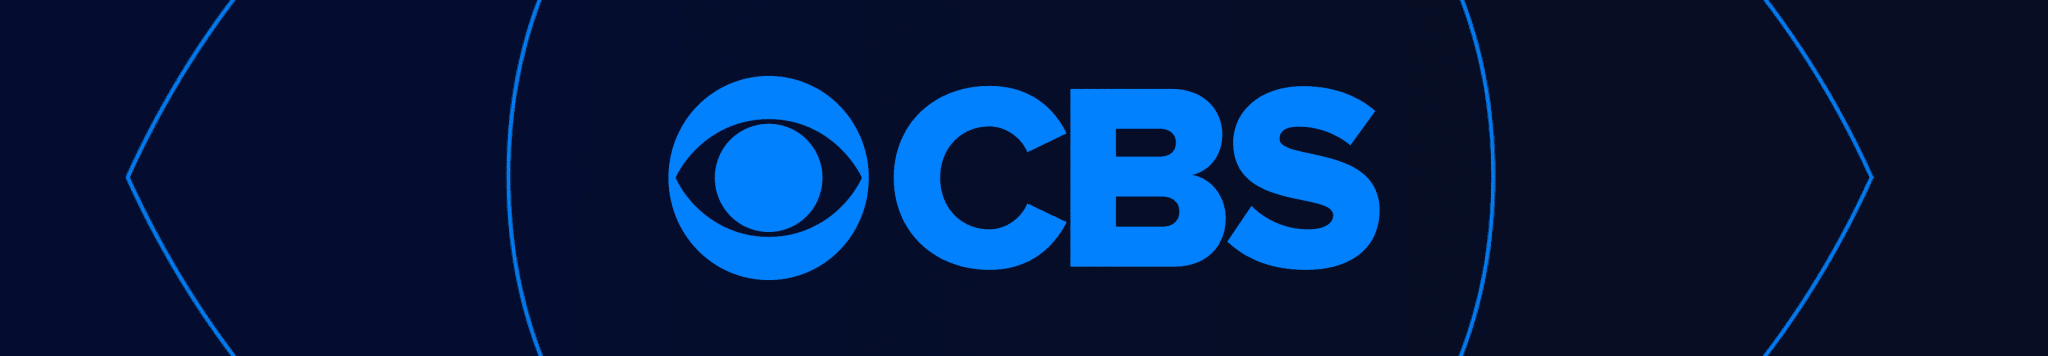 CBS Entertainment Sombreros